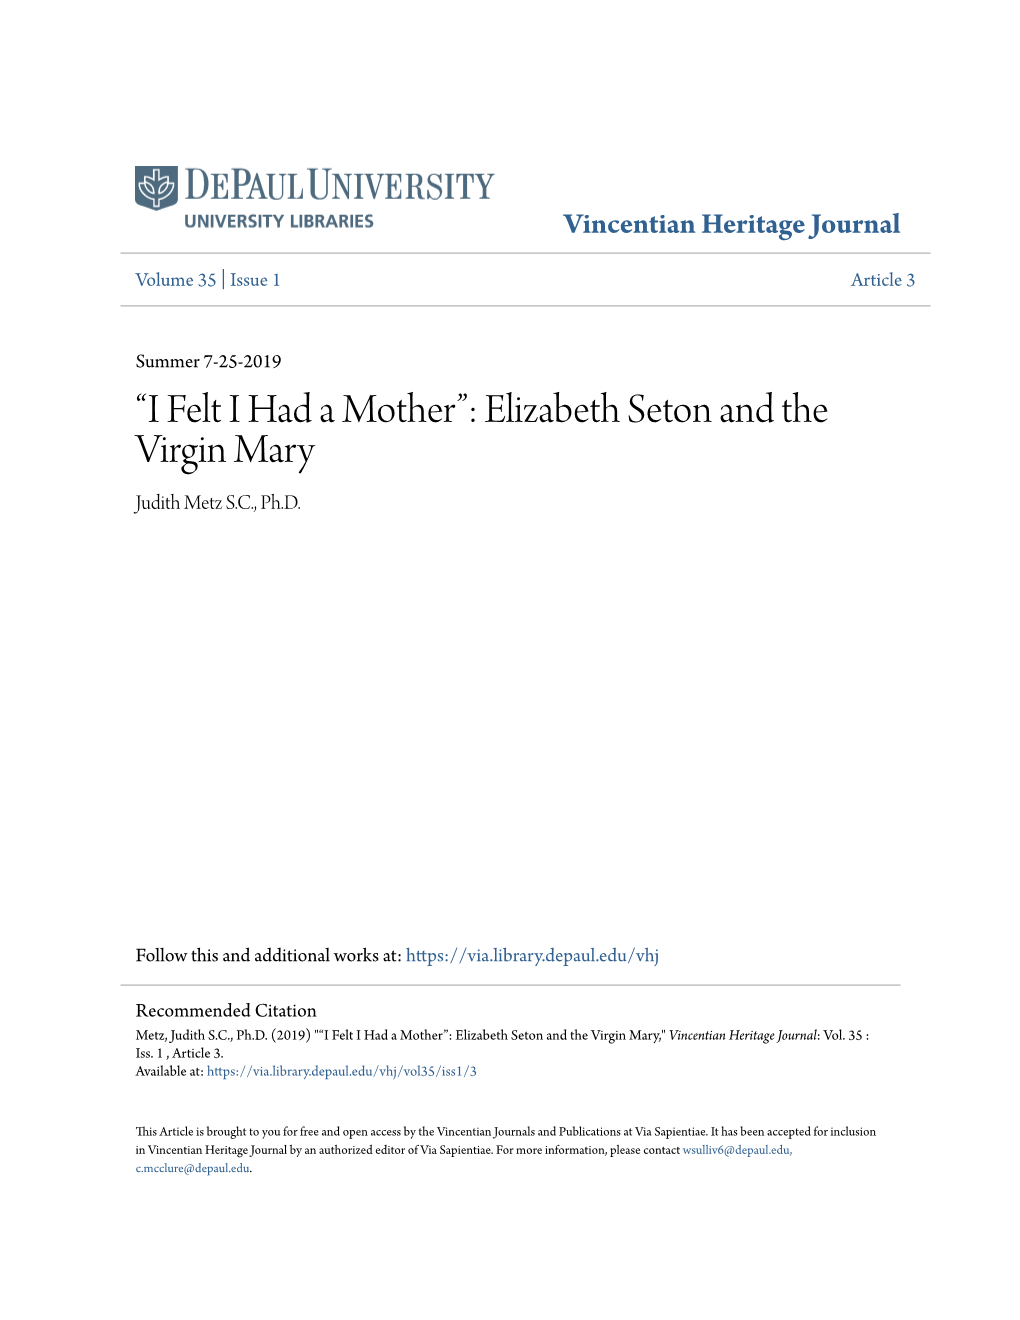 “I Felt I Had a Mother”: Elizabeth Seton and the Virgin Mary Judith Metz S.C., Ph.D